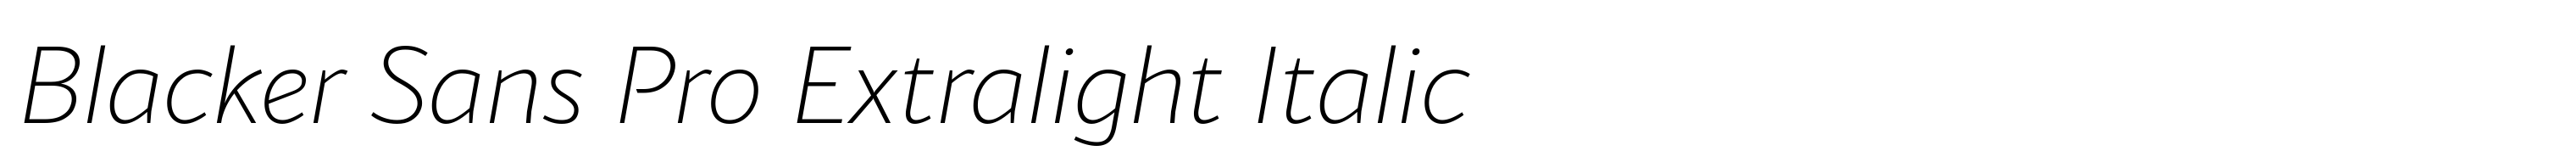 Blacker Sans Pro Extralight Italic